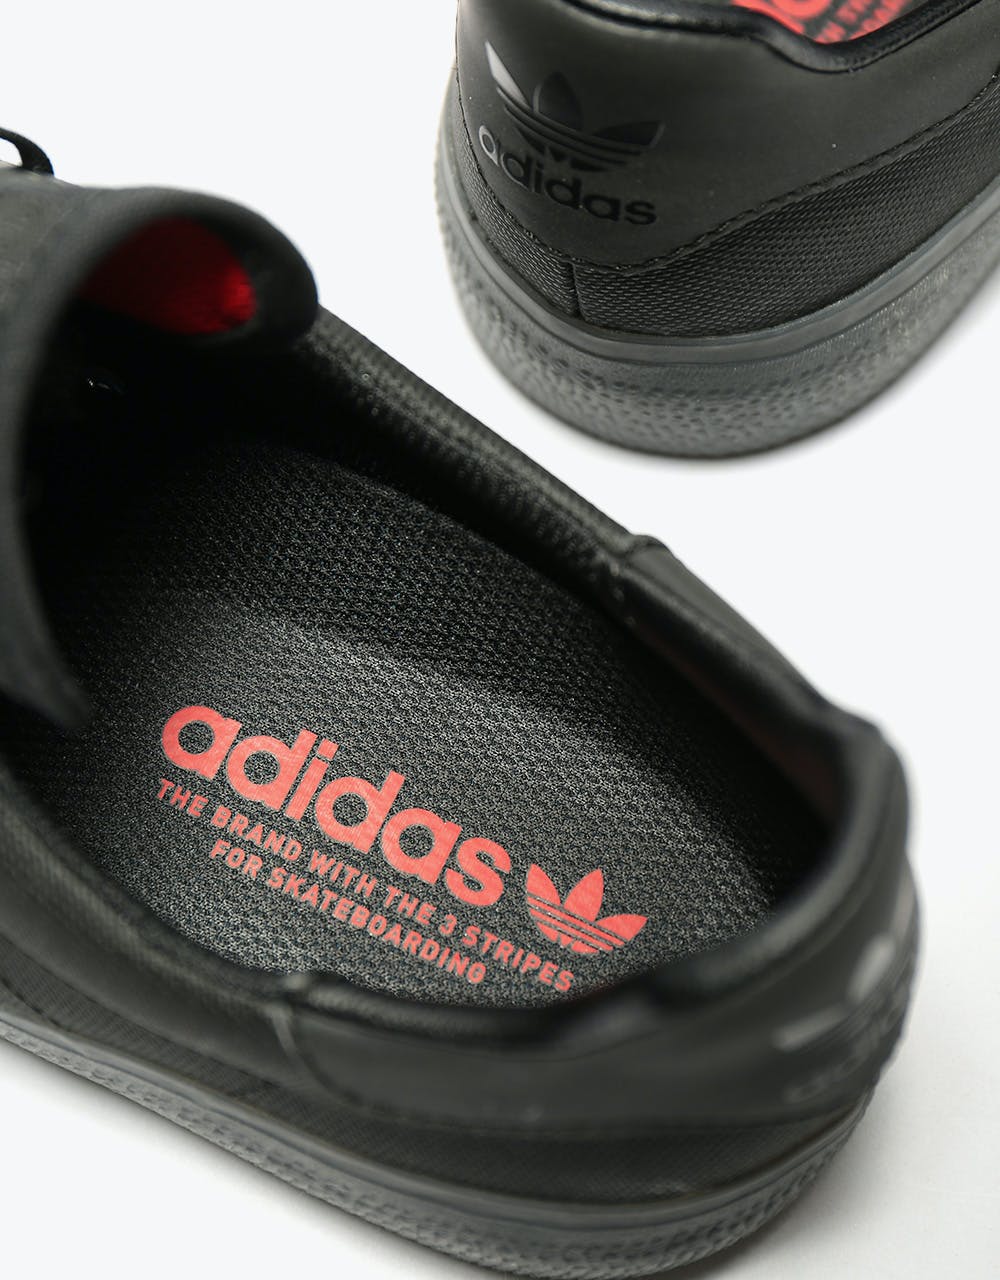 Adidas 3MC Skate Shoes - Core Black/Core Black/Core Black